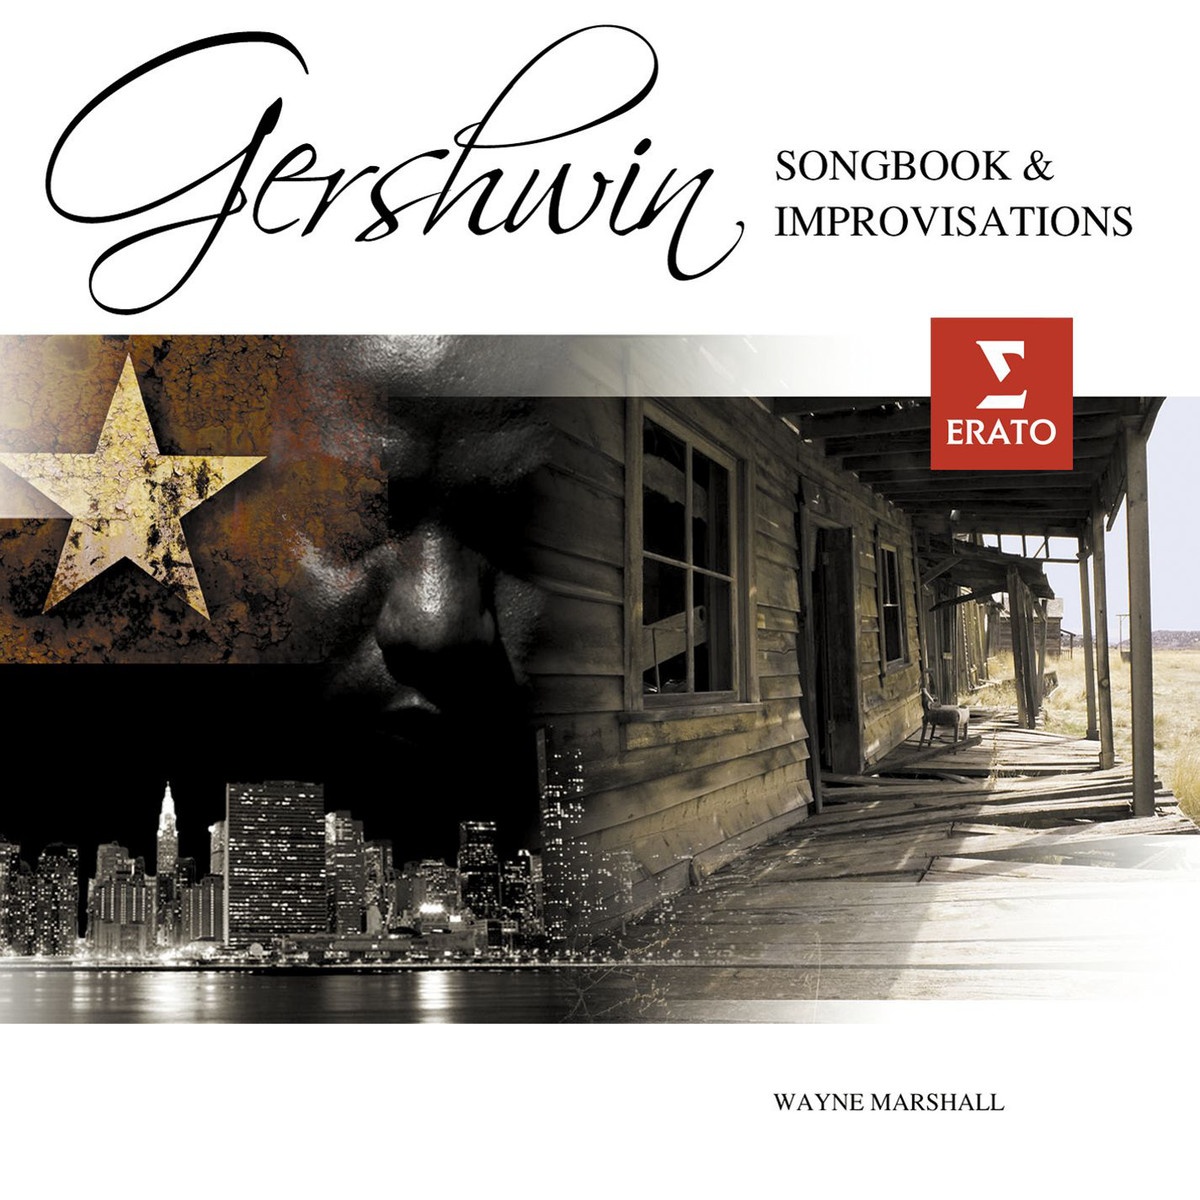 A Gershwin Songbook: improvisations on songs by George Gershwin: Clara, Clara (Pory & Bess)